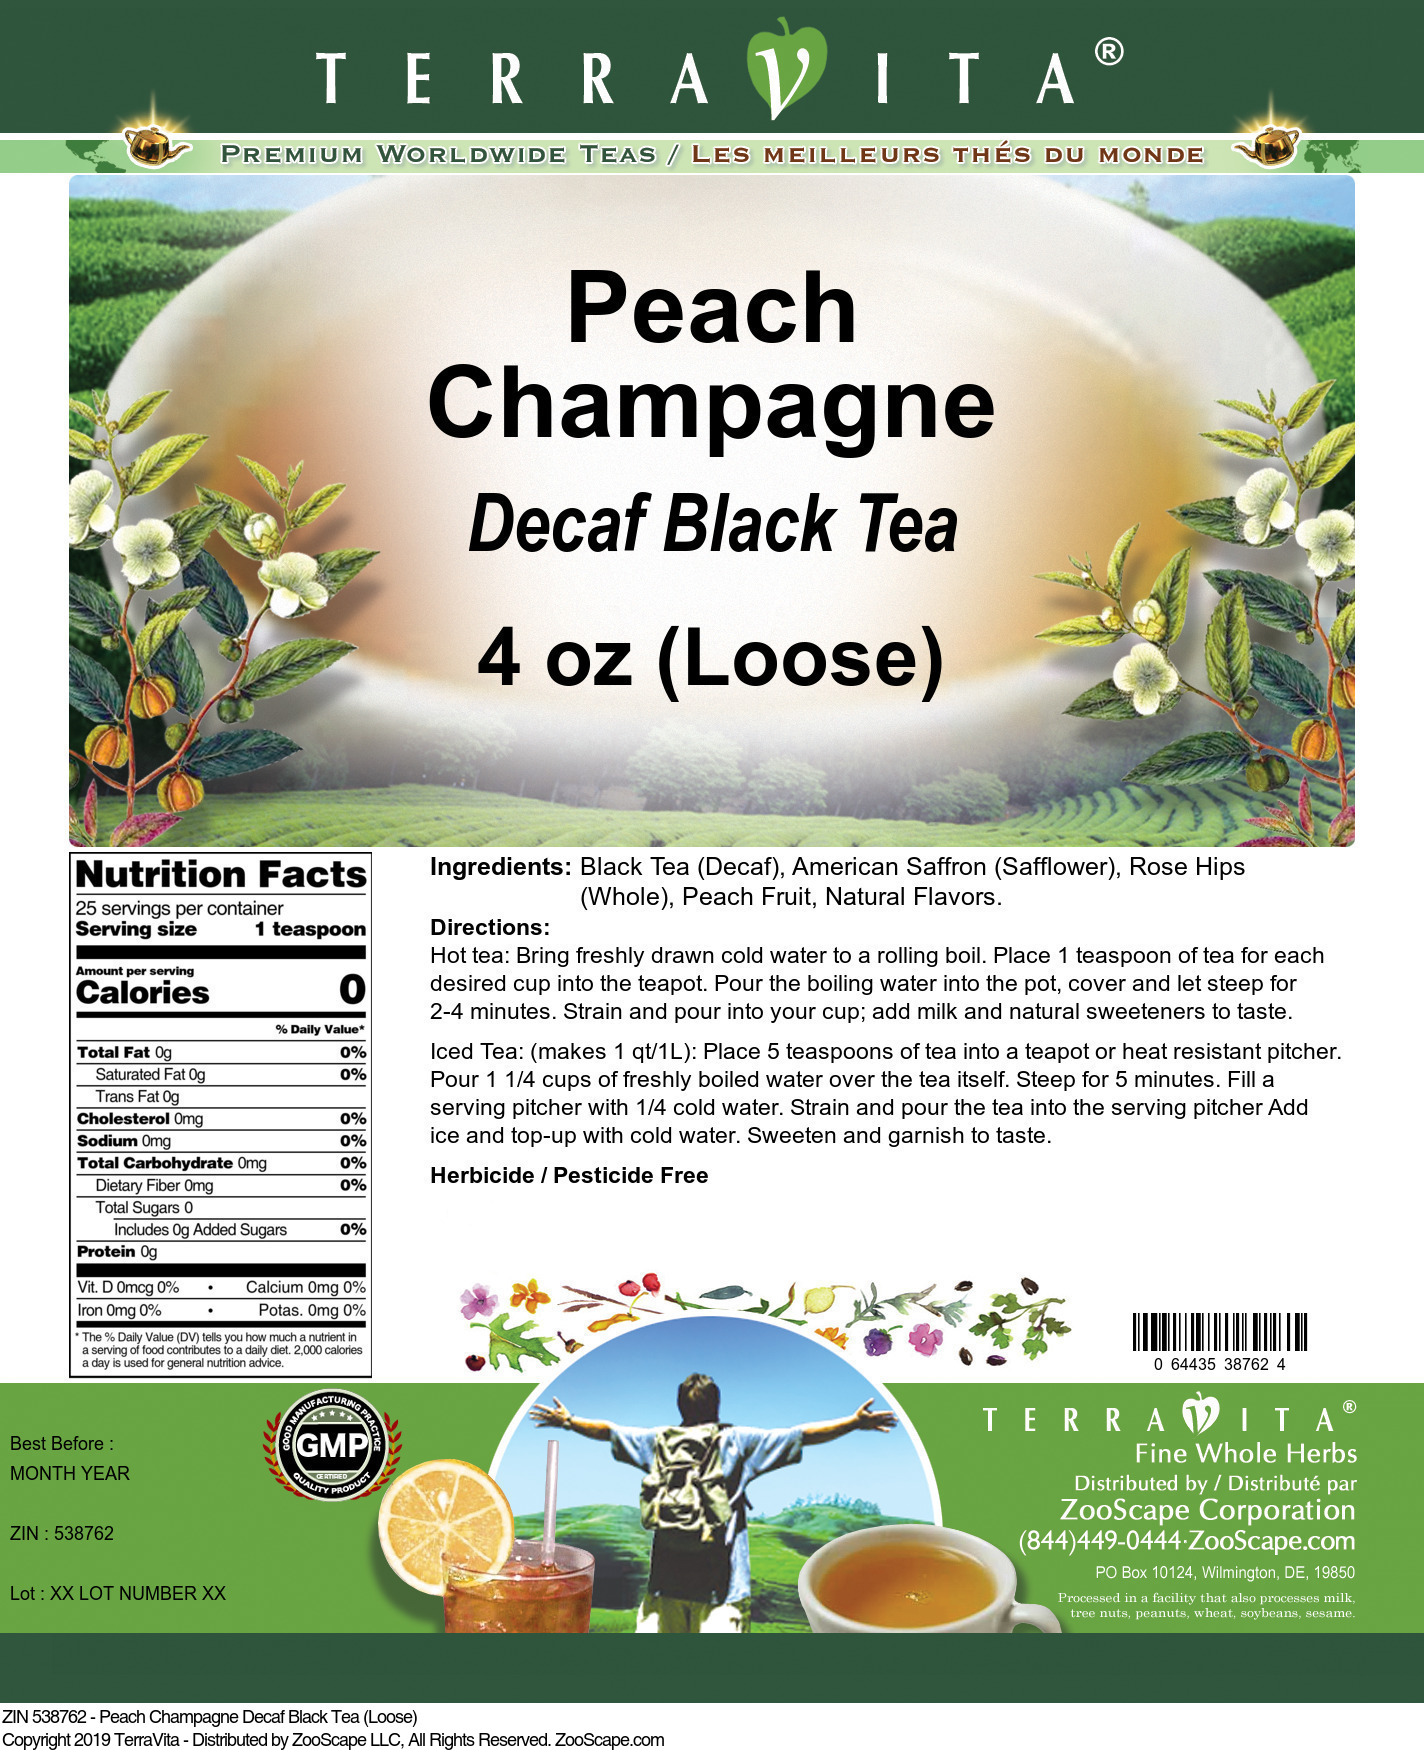 Peach Champagne Decaf Black Tea (Loose) - Label